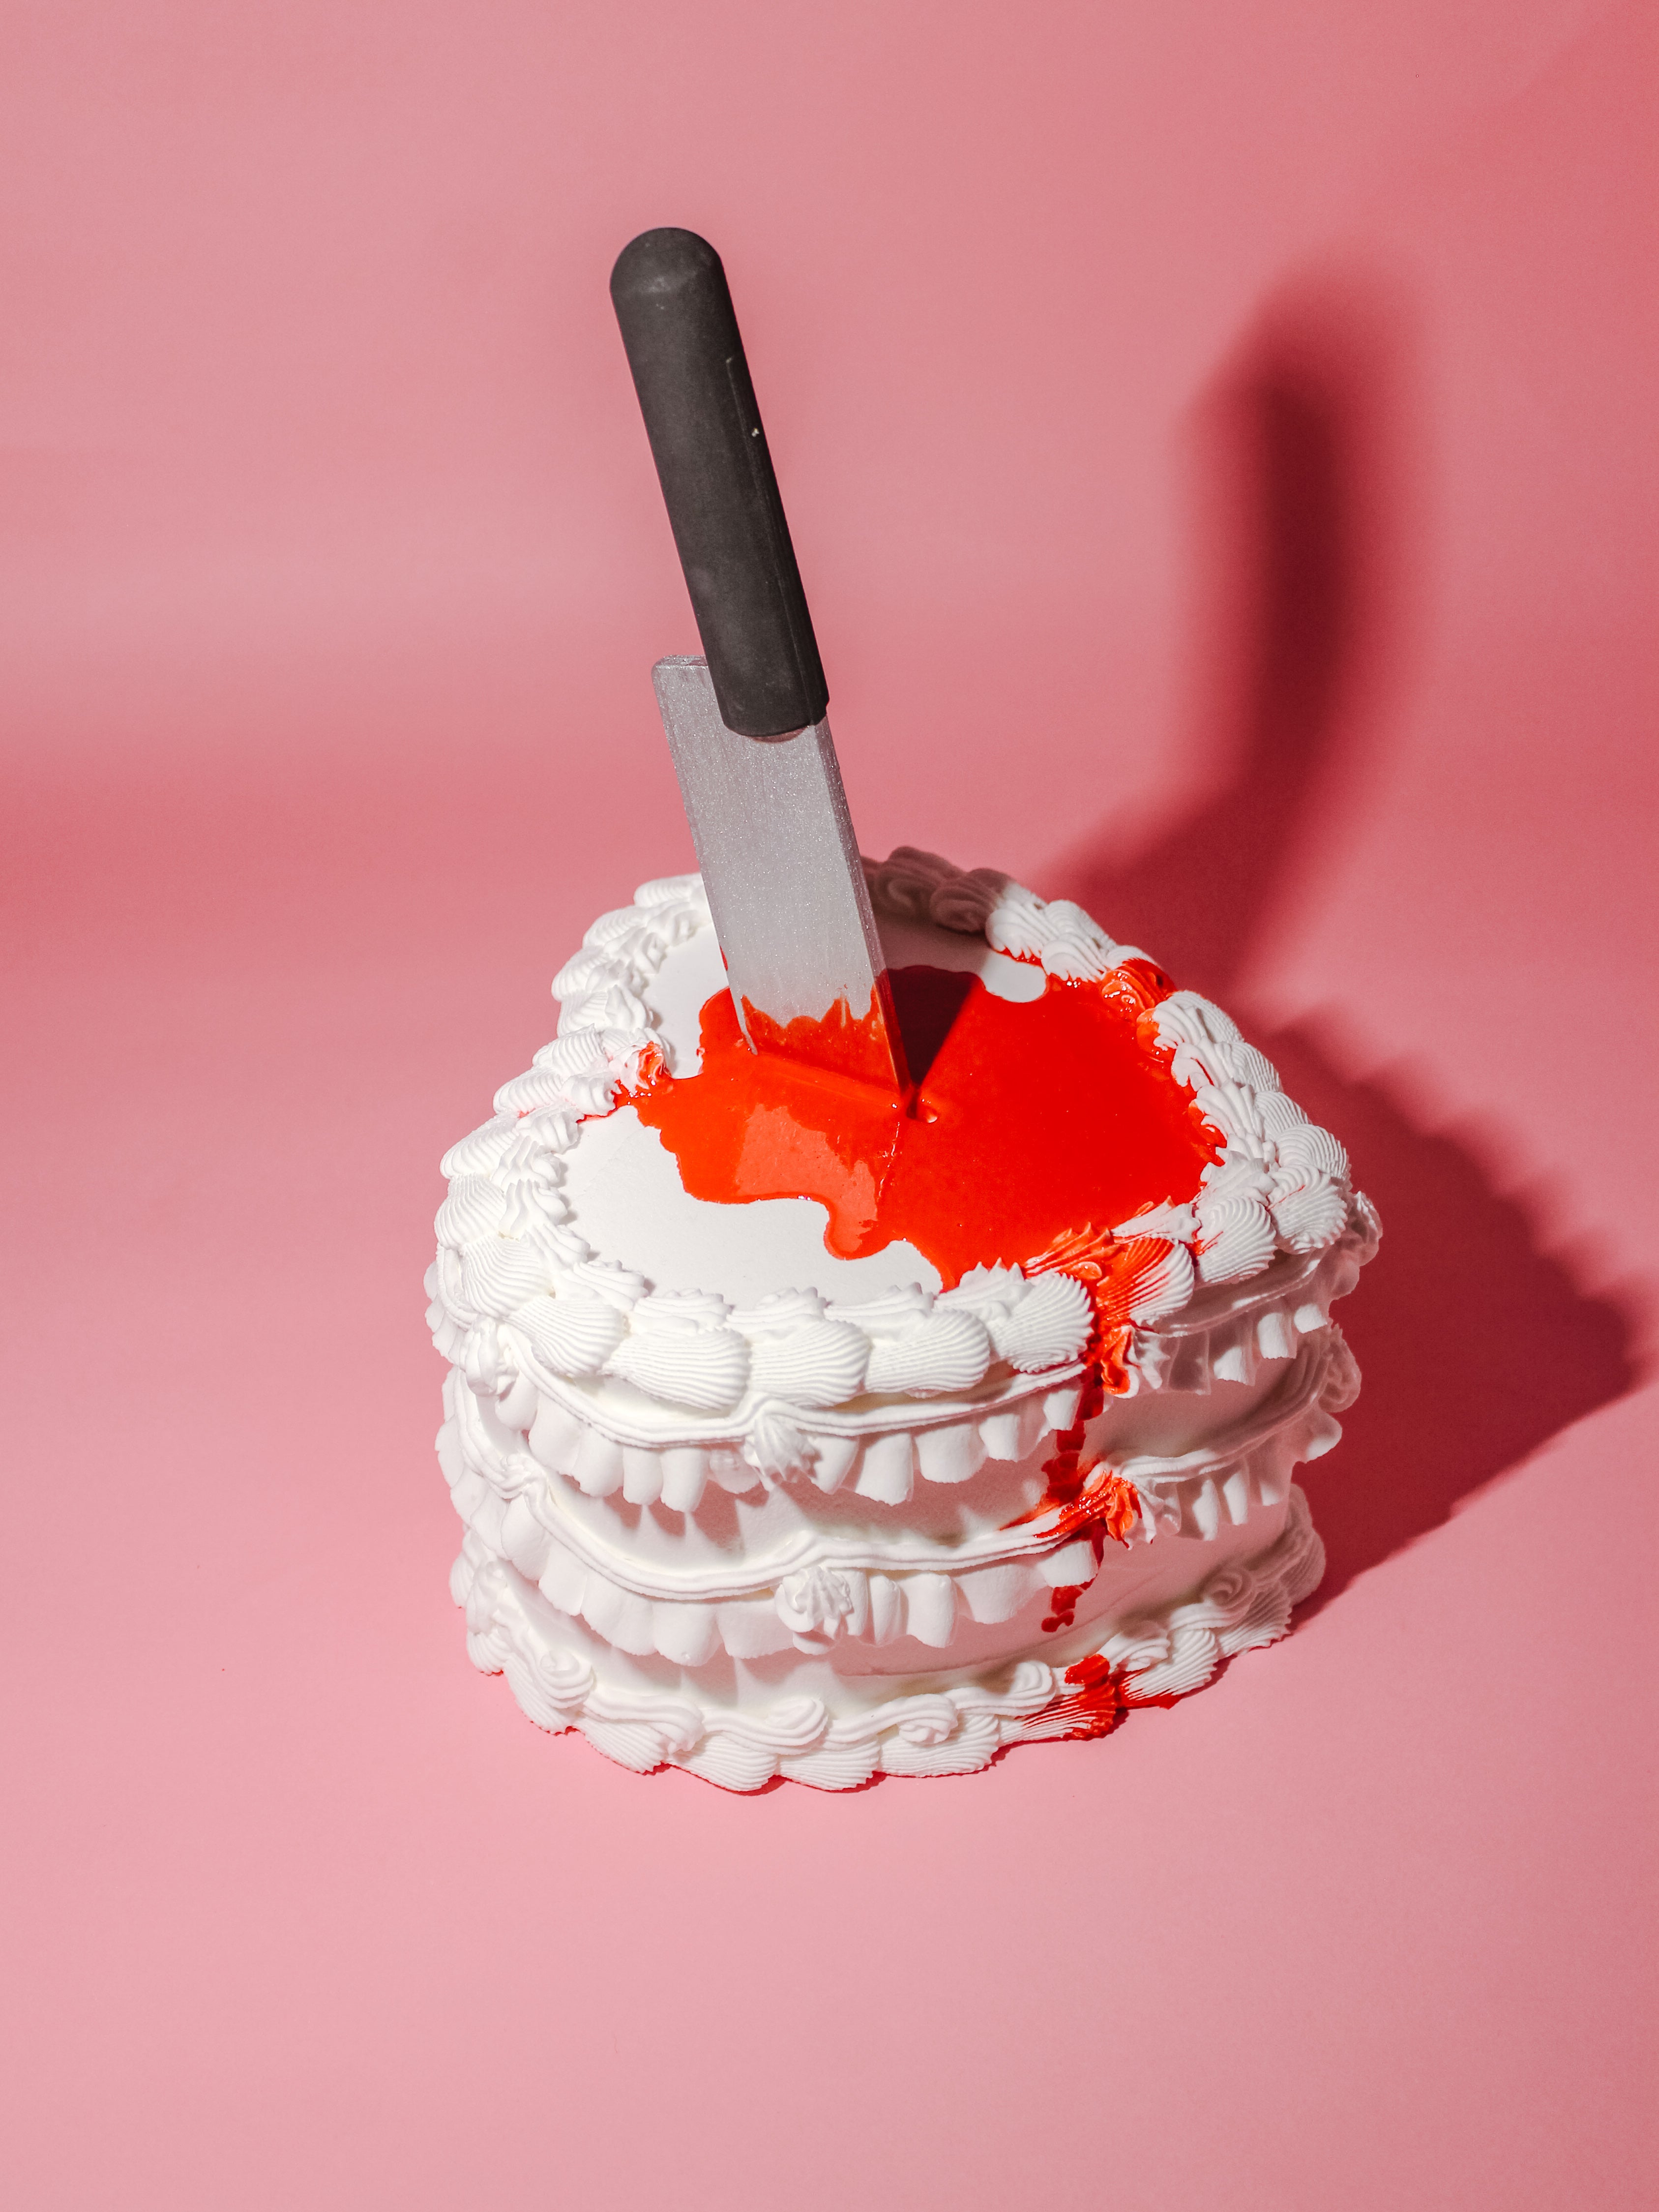 DEZICAKES Fake Cake Artificial Food Blue Birthday Cake | eBay